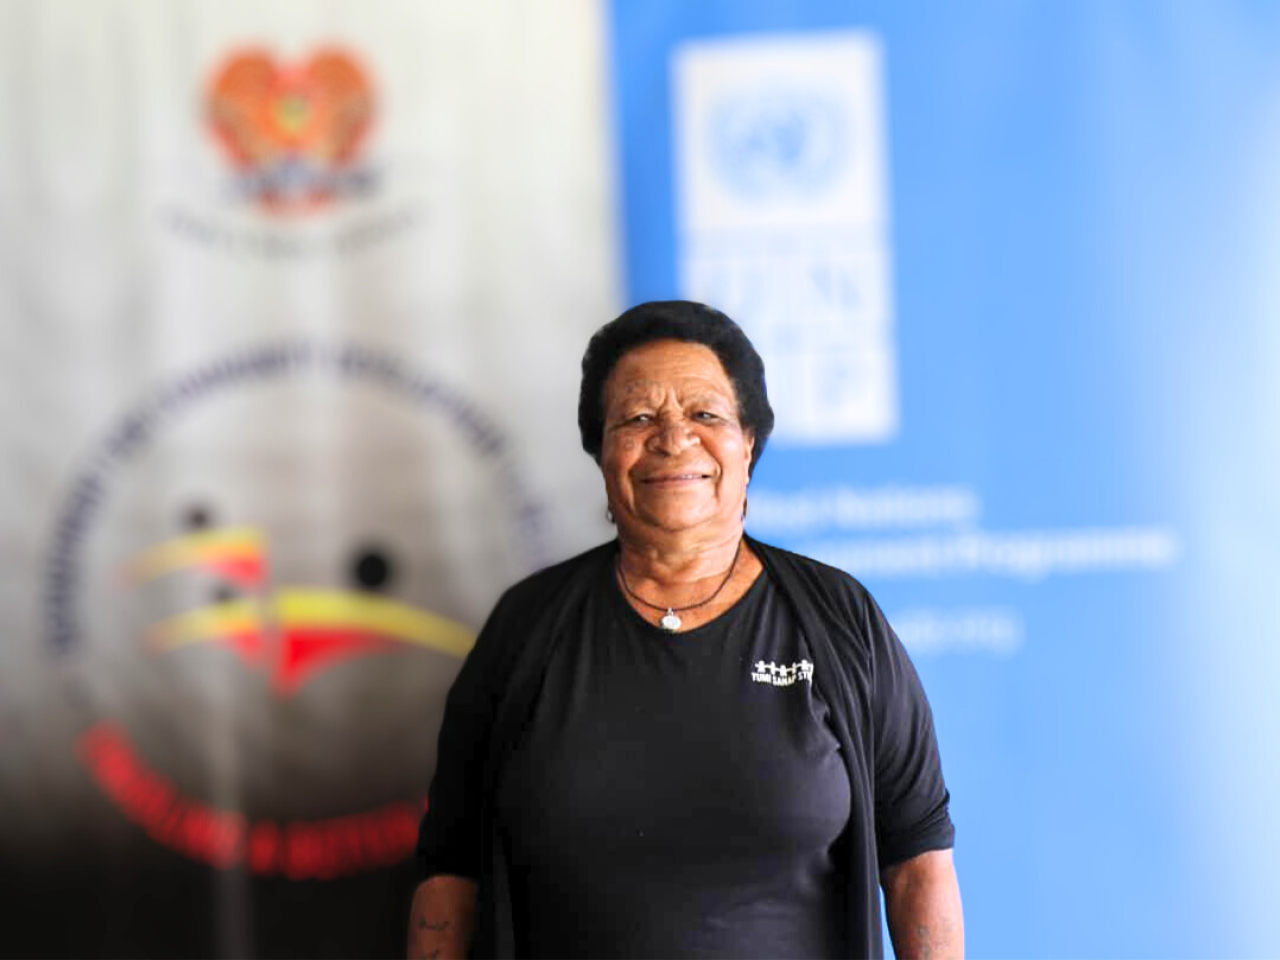 Ms. Angela Apa, President of the Kup Women for Peace group. Photo: Lydia Kaia | UNDP Papua New Guinea